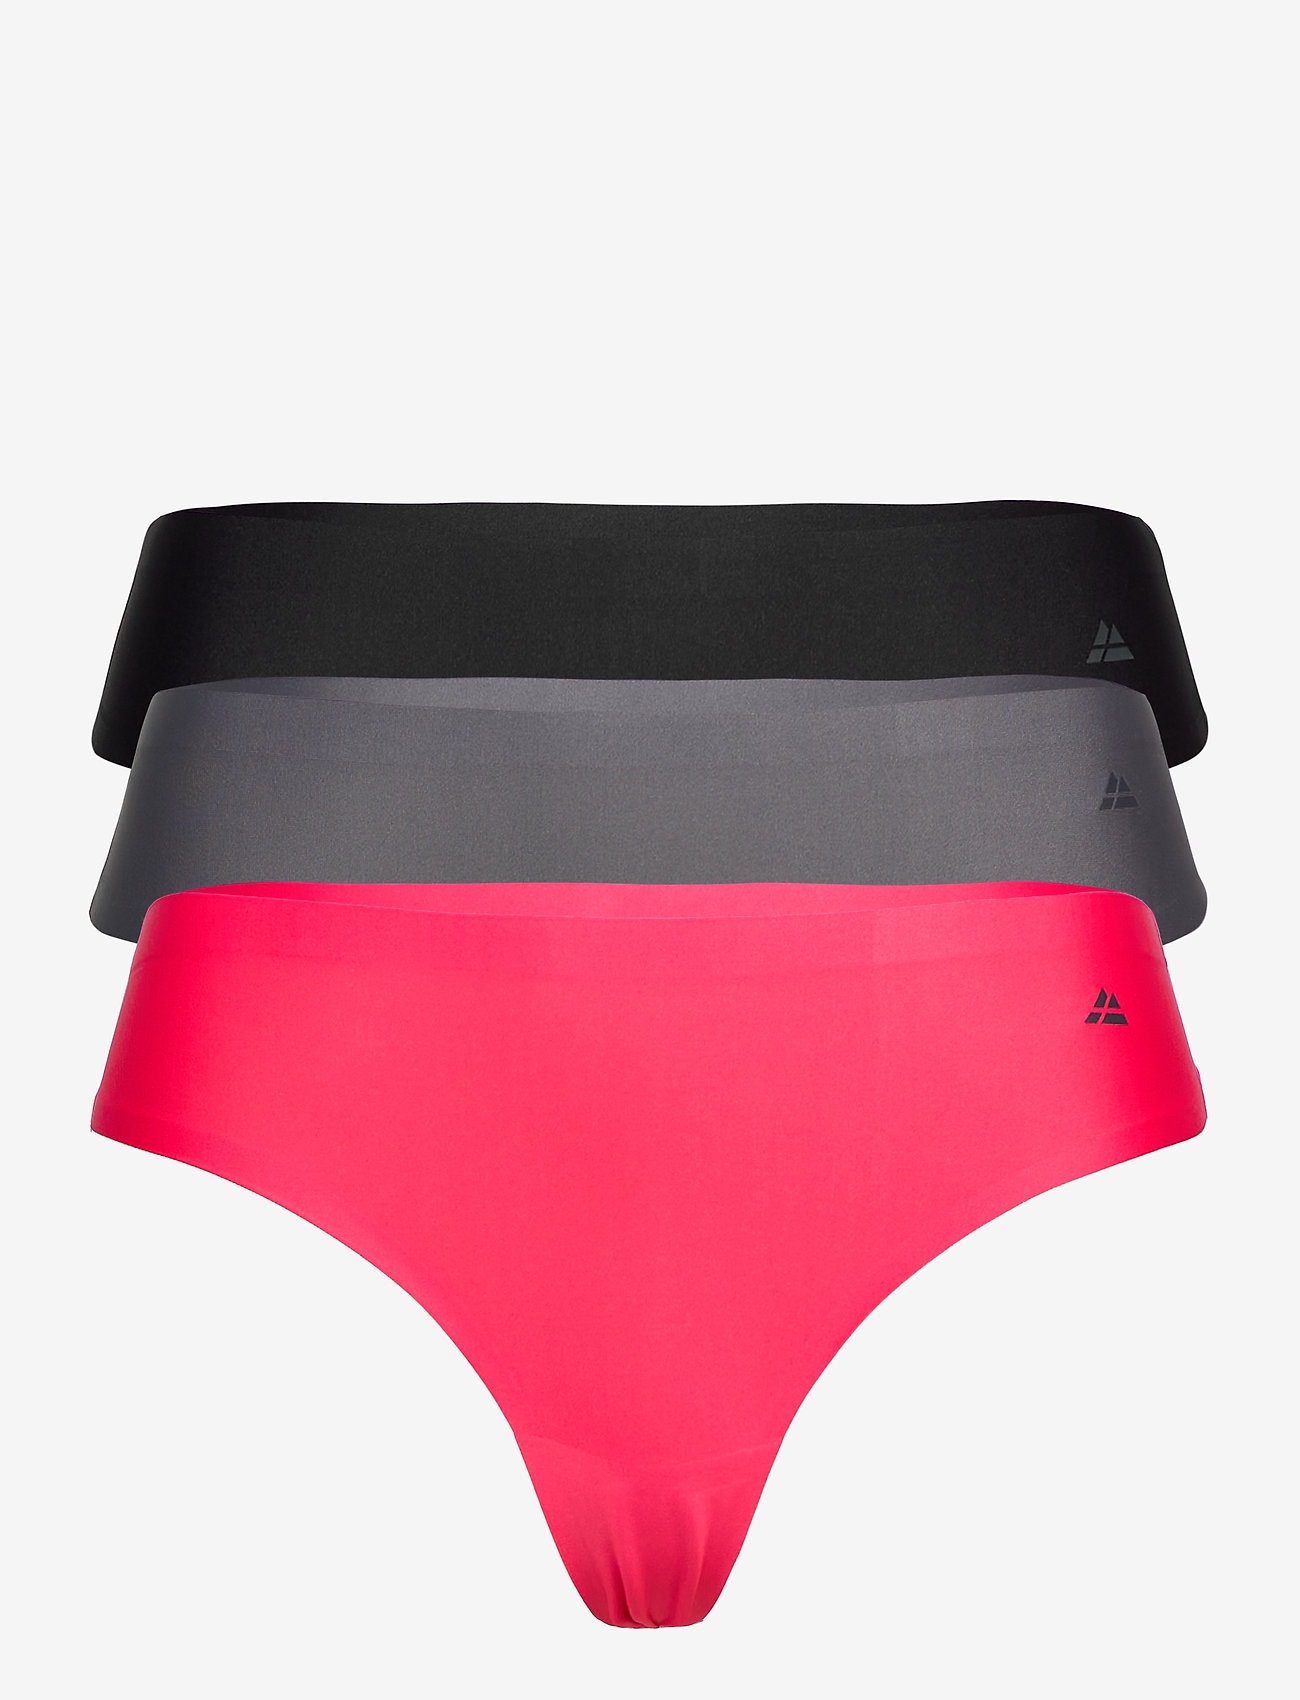 Danish Endurance - Women's Invisible Thong - bezvīļu biksītes - multicolor (1 x black, 1 x grey, 1 x pink) - 0